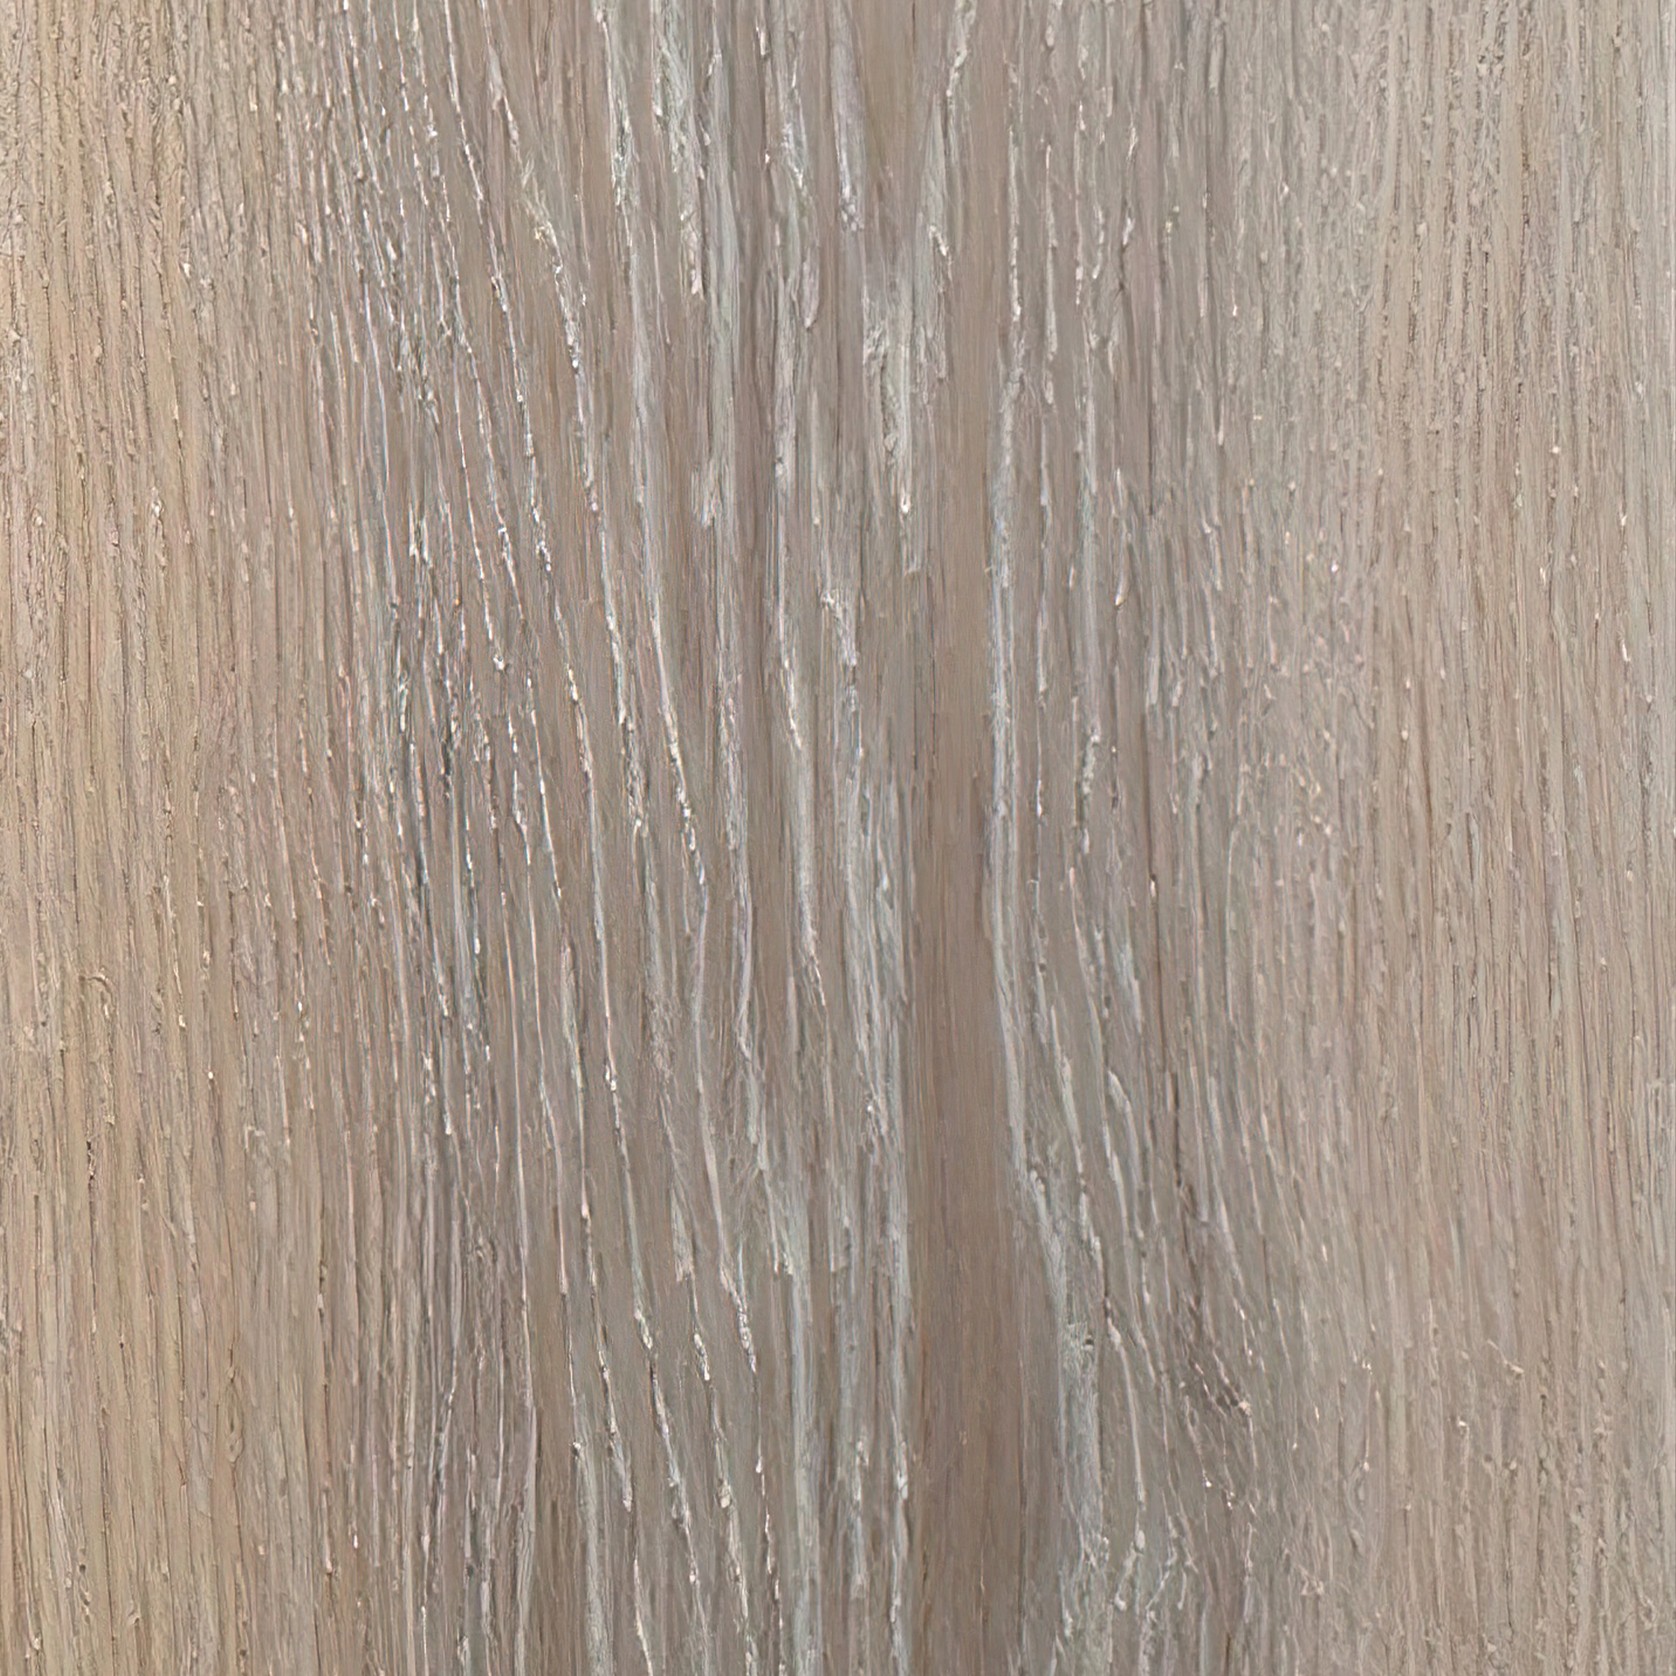 White Plains Timber Flooring gallery detail image